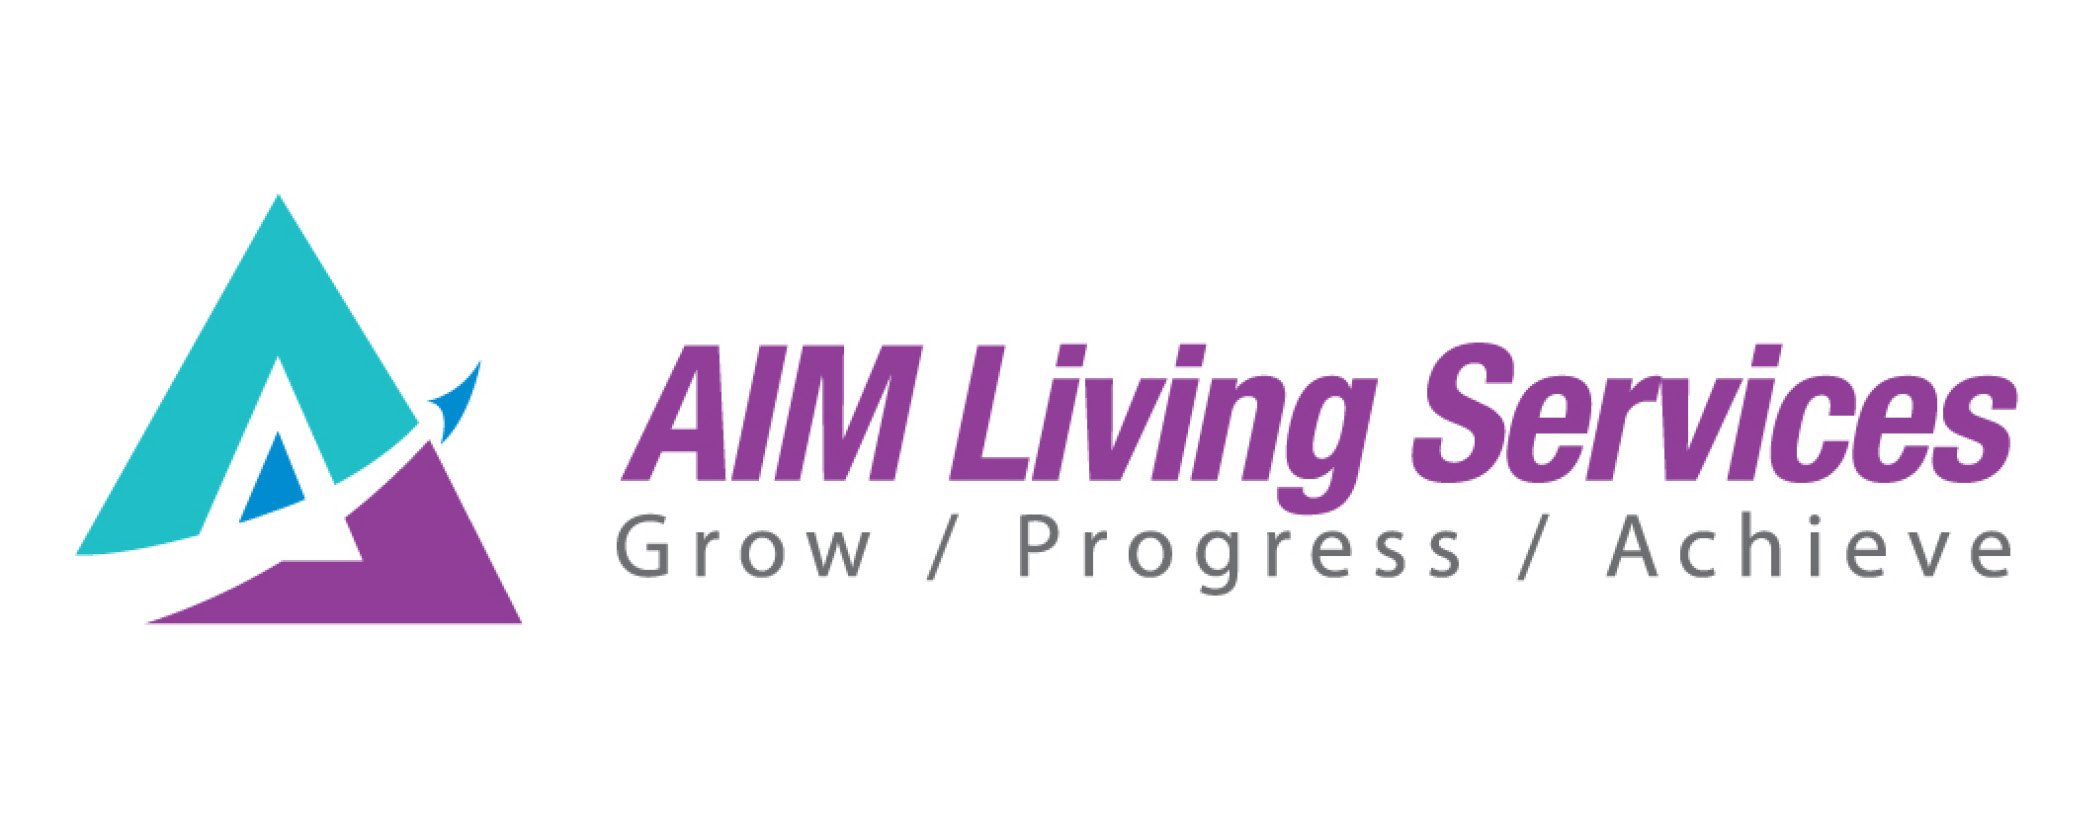 AIM Living Services.jpg